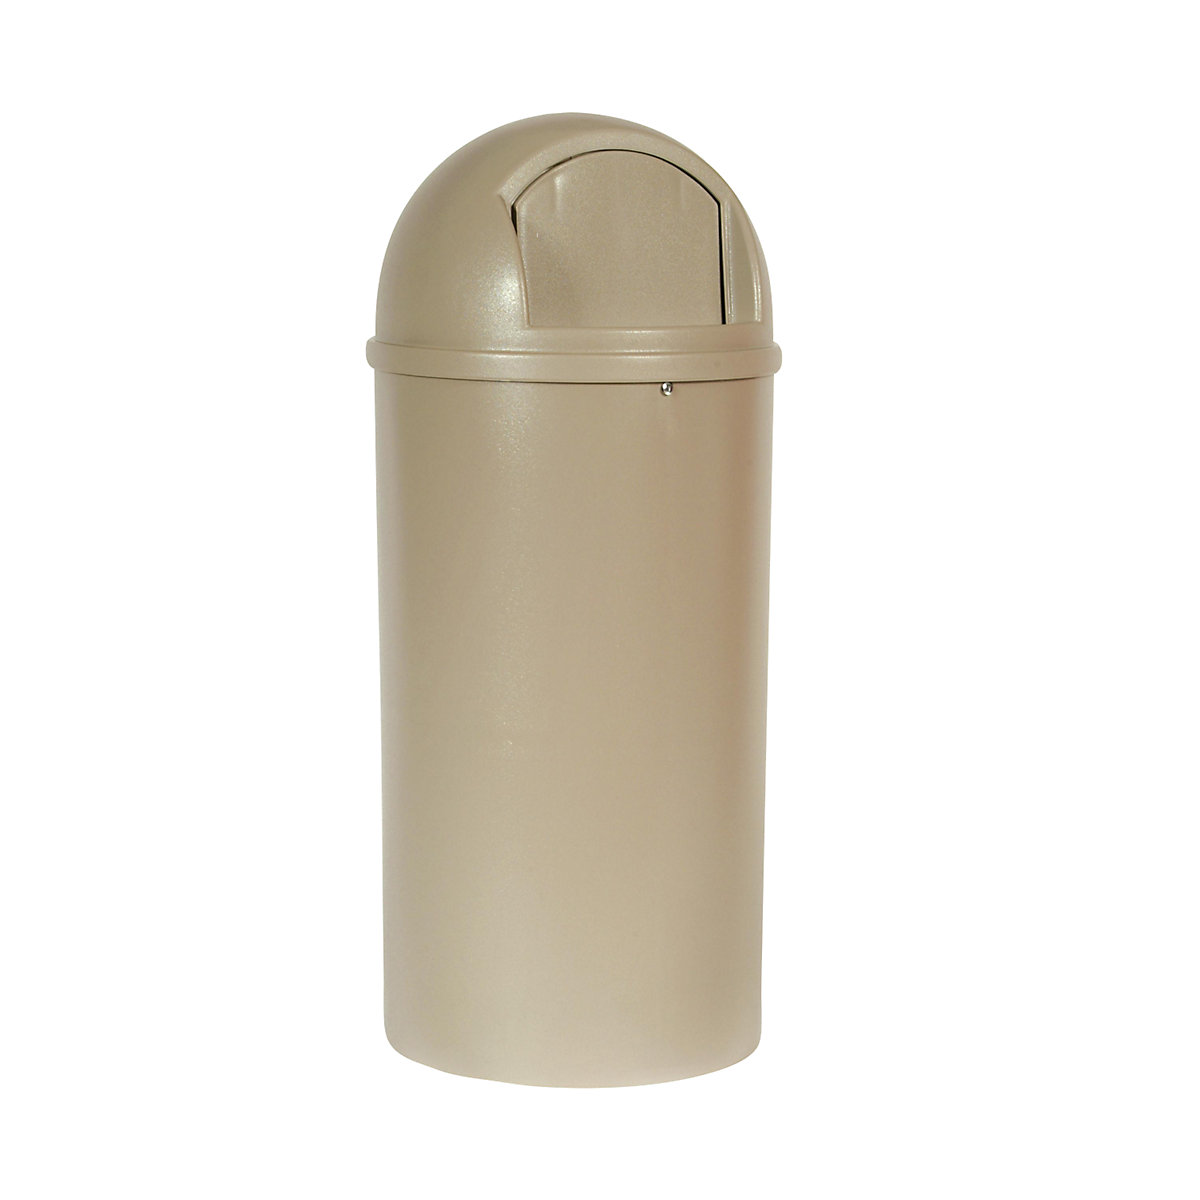 Rubbermaid Abfallbehälter (PE), feuerhemmend, Volumen 80 l, HxØ 1070 x 455 mm, beige